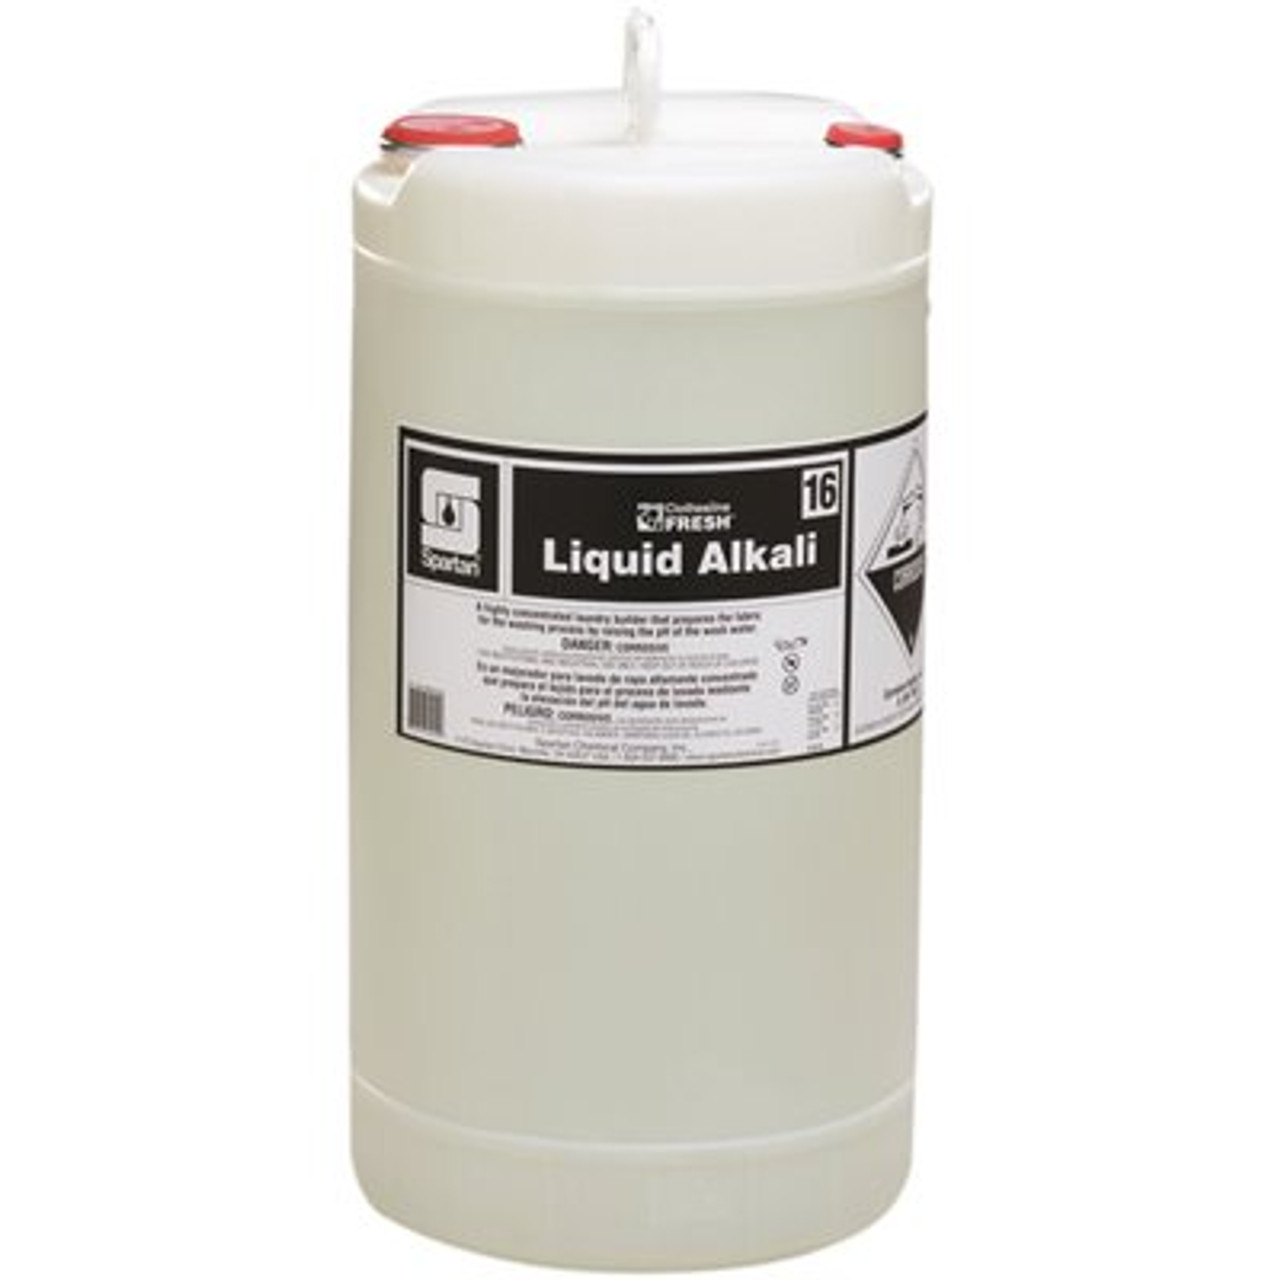 Spartan Chemical Co. Clothesline Fresh 15 Gallon Liquid Alkali